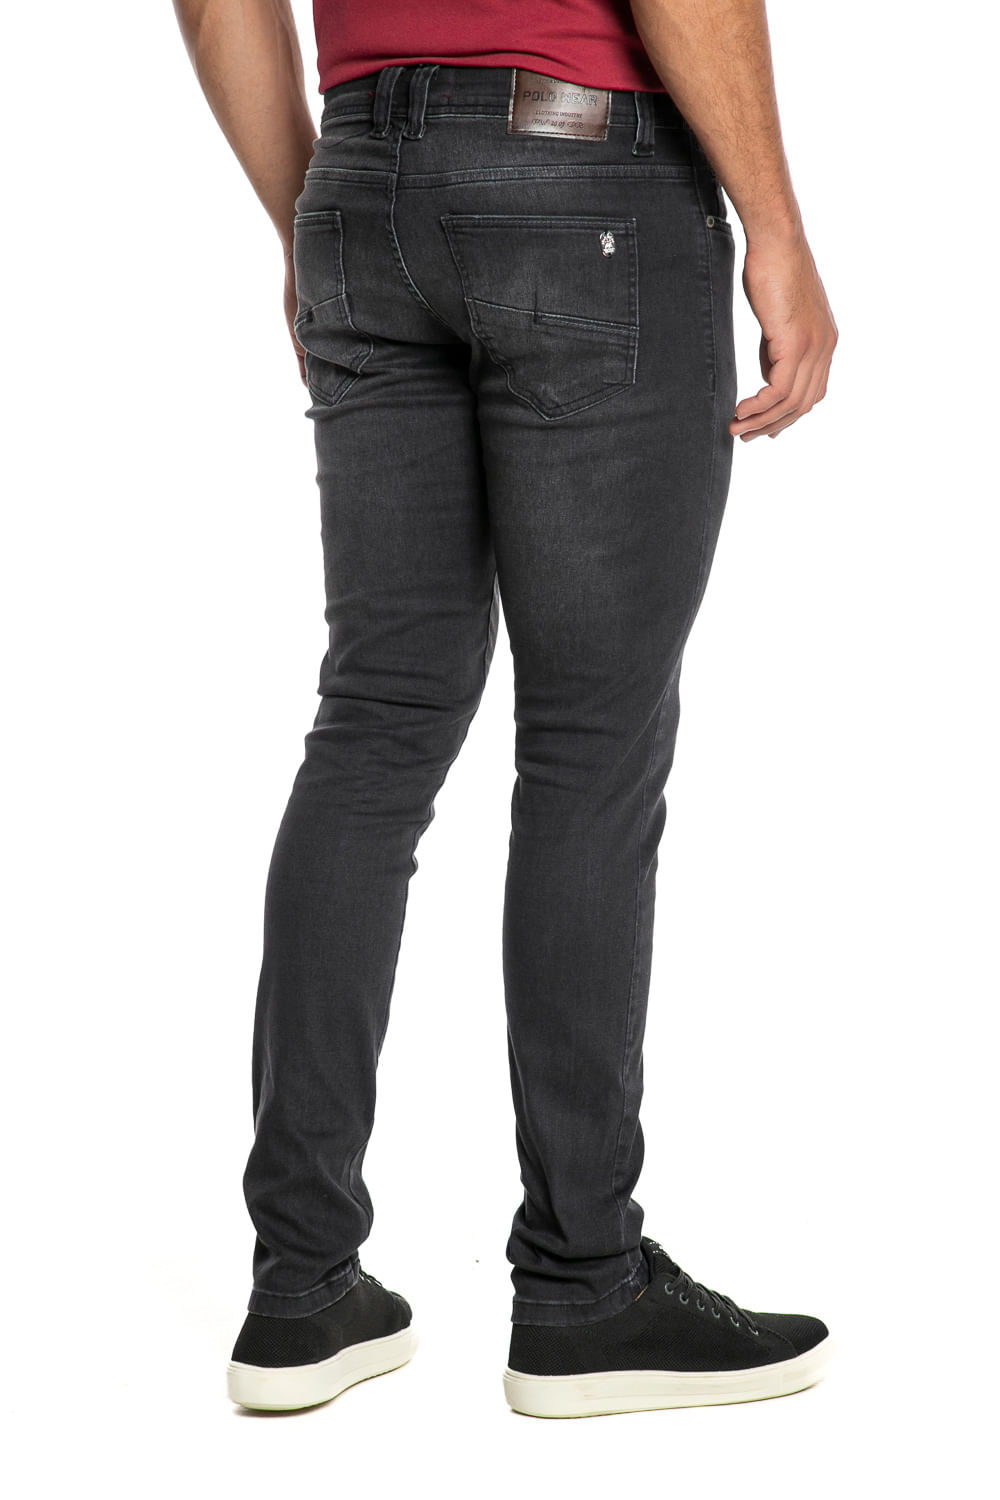 Calça Masculina Jeans Jogger Drift Black Polo Wear - Polo Wear